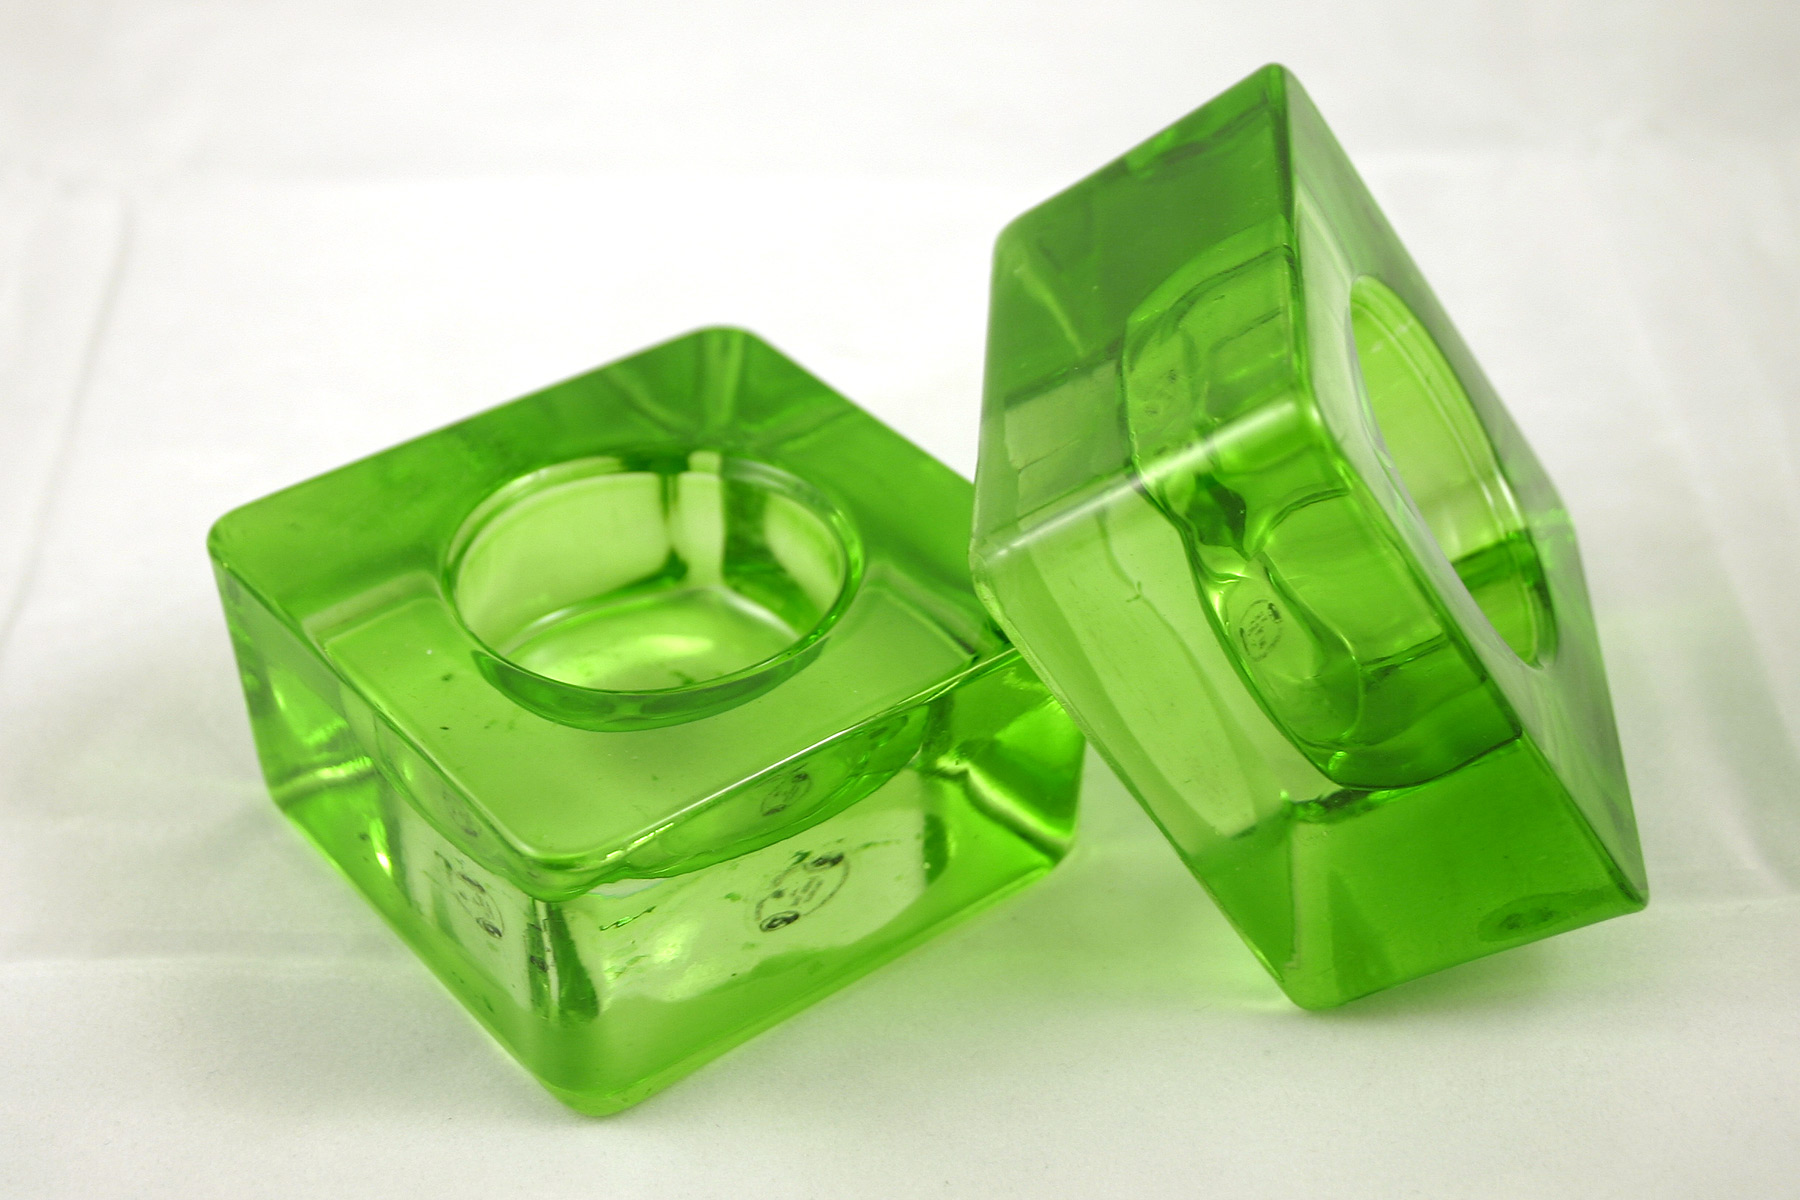 Free photo: Green glass - Glass, Green, Reflective - Free Download - Jooinn